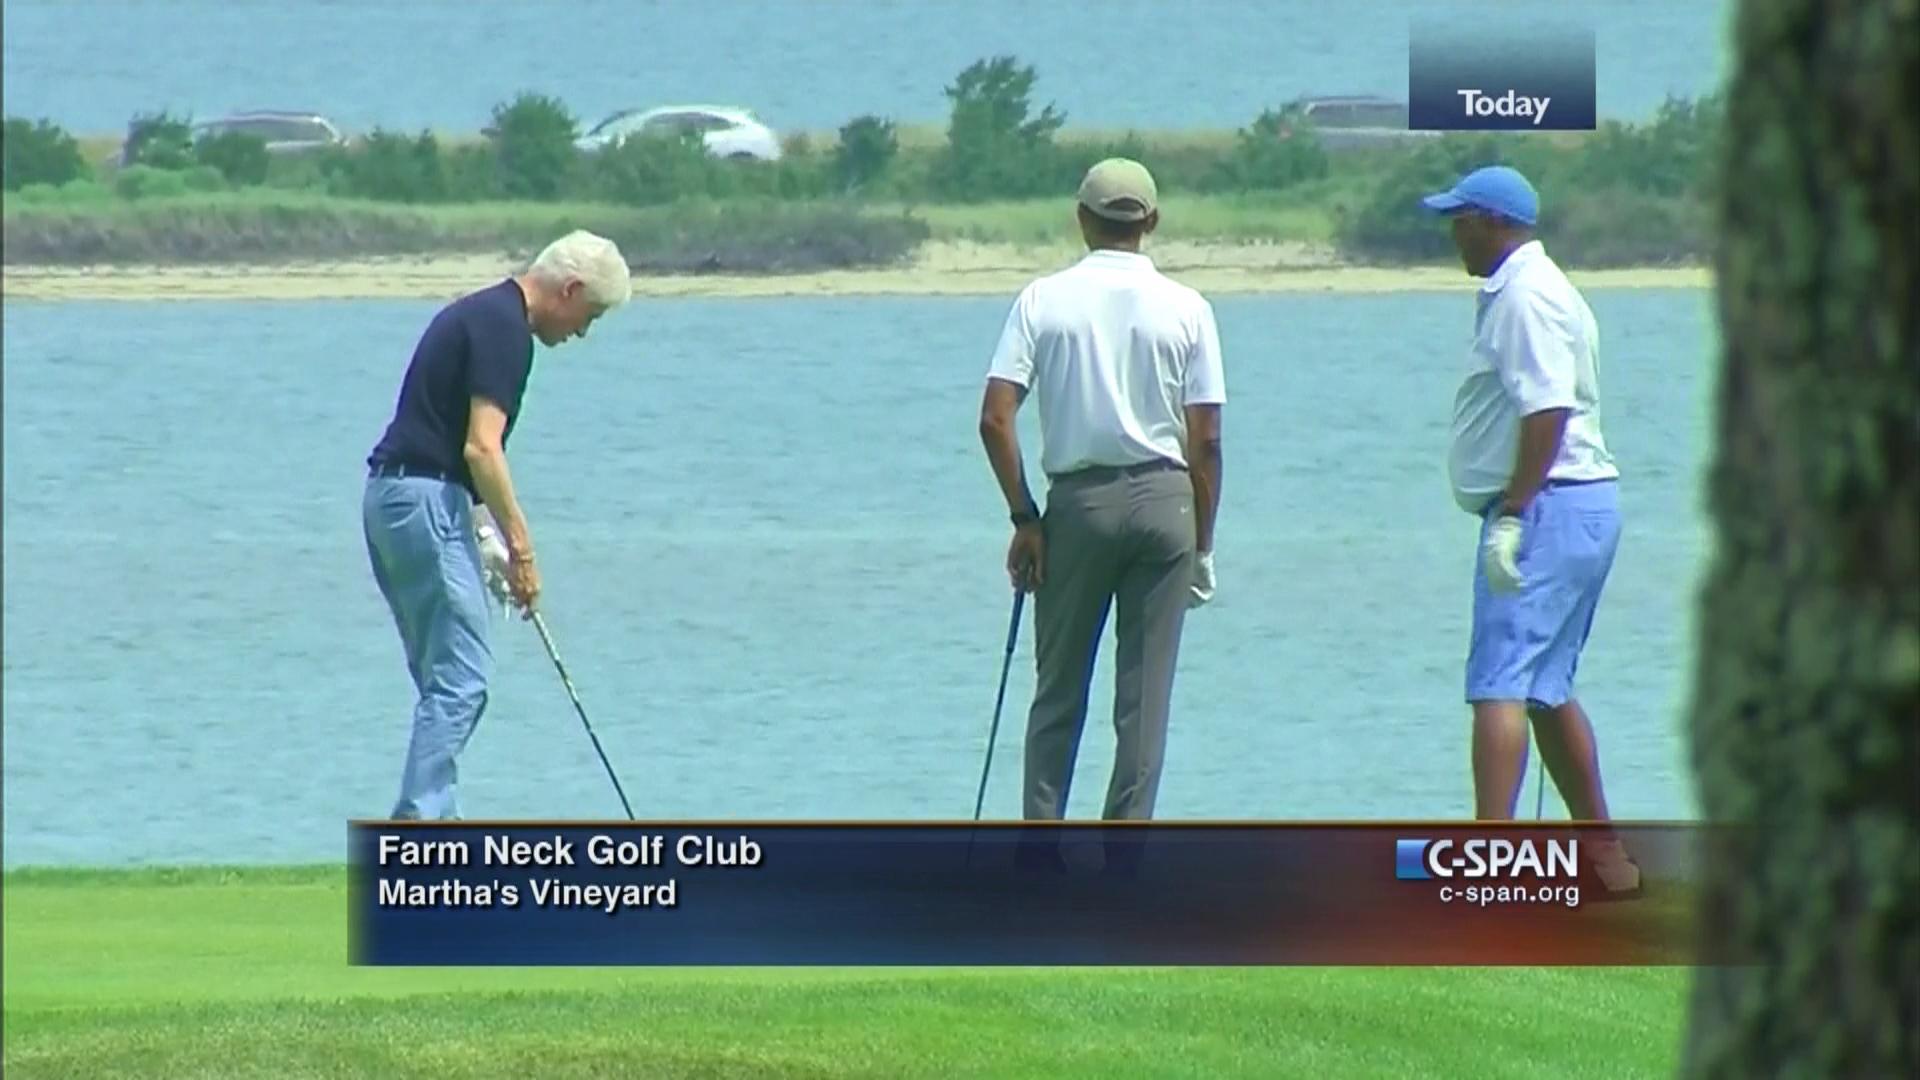 President Obama Playing Golf, Aug 14 2015 | Video | C-SPAN.org